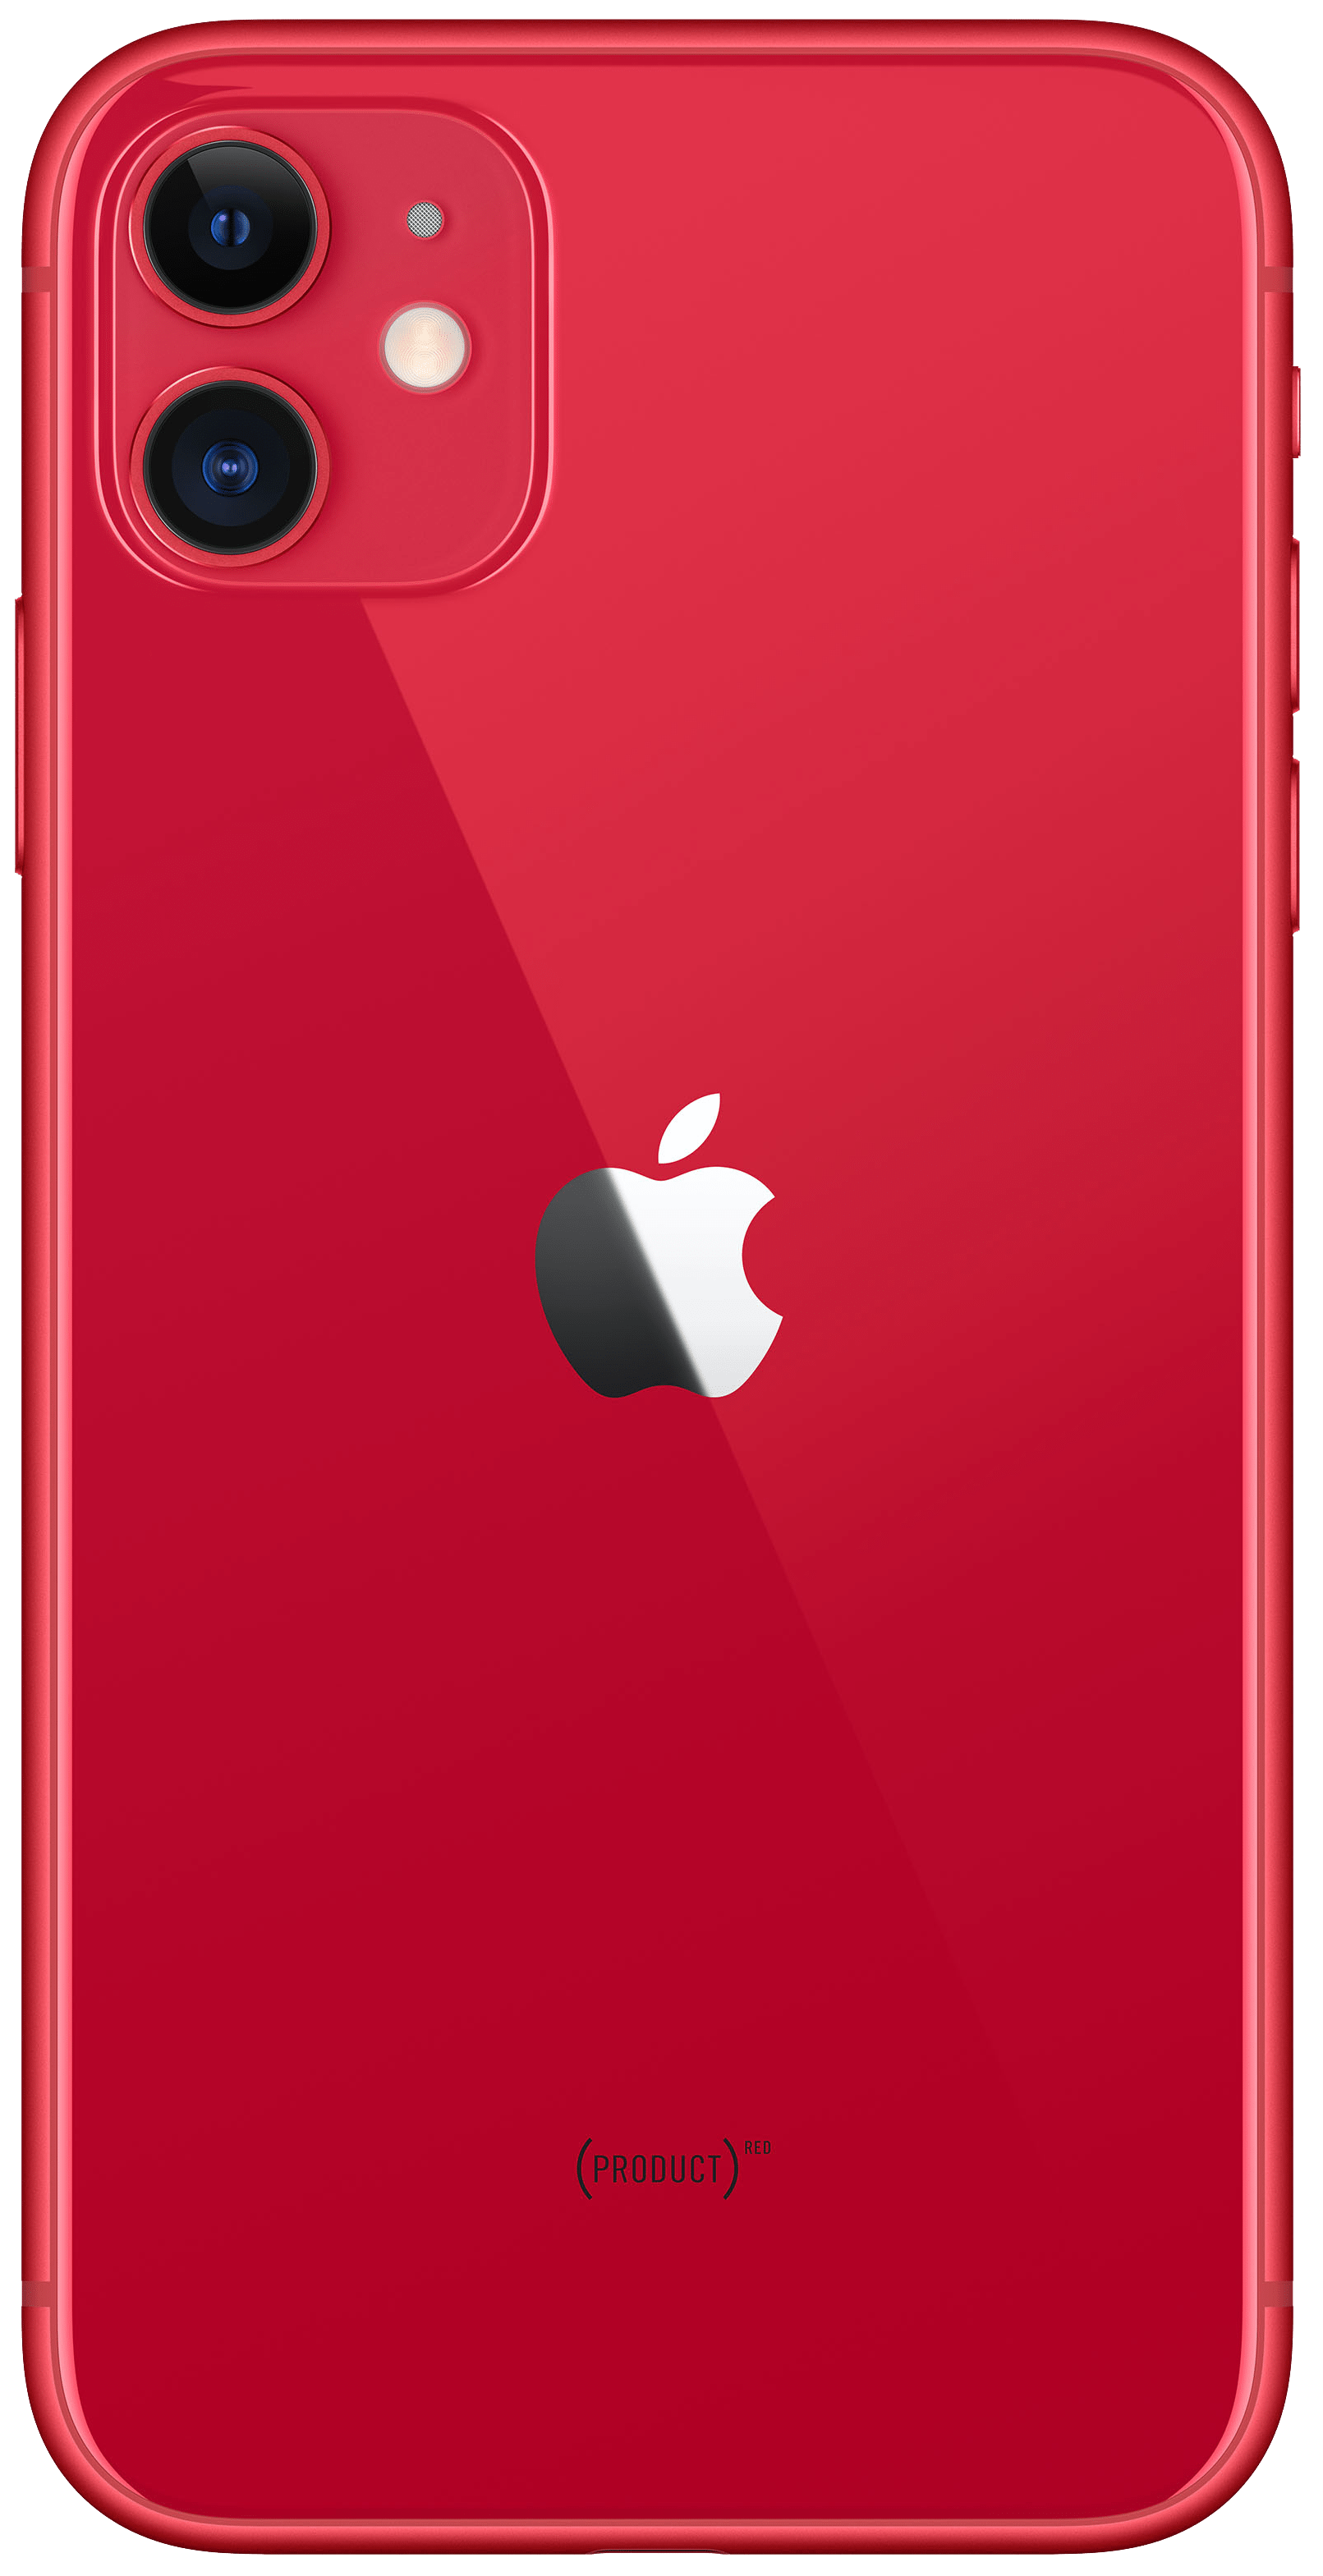 Celular iPhone Xr de 64Gb Reacondicionado rojo+ AirPods Pro 2 Genericos